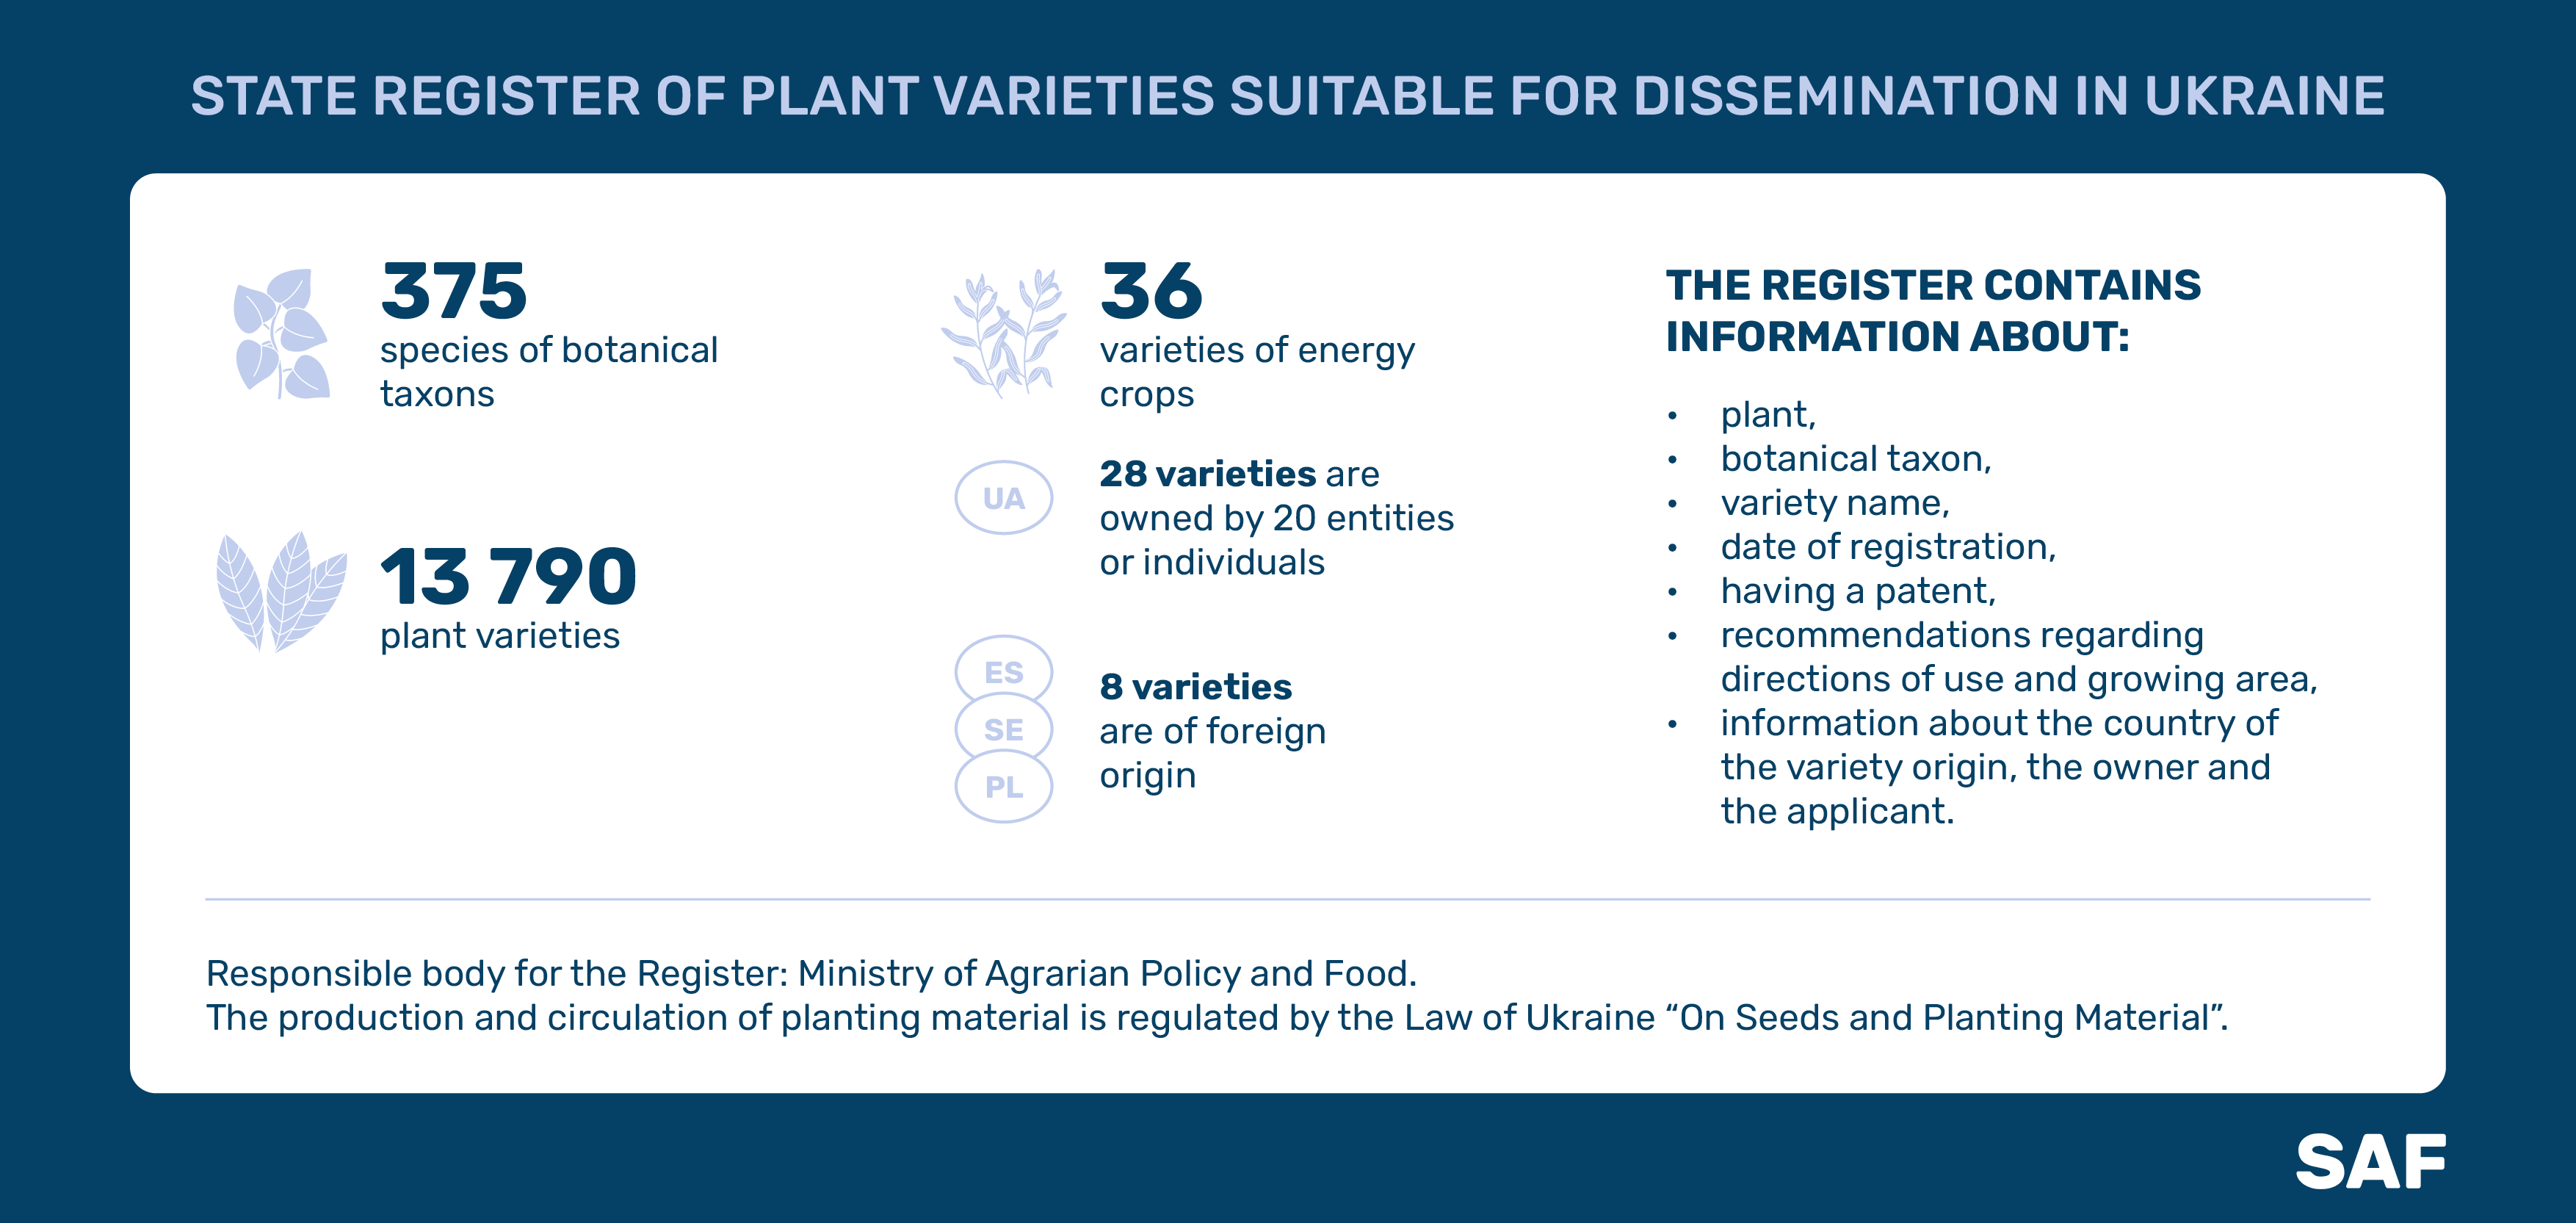 STATE REGISTER OF PLANT VARIETIES SUITABLE FOR DISSEMINATION IN UKRAINE